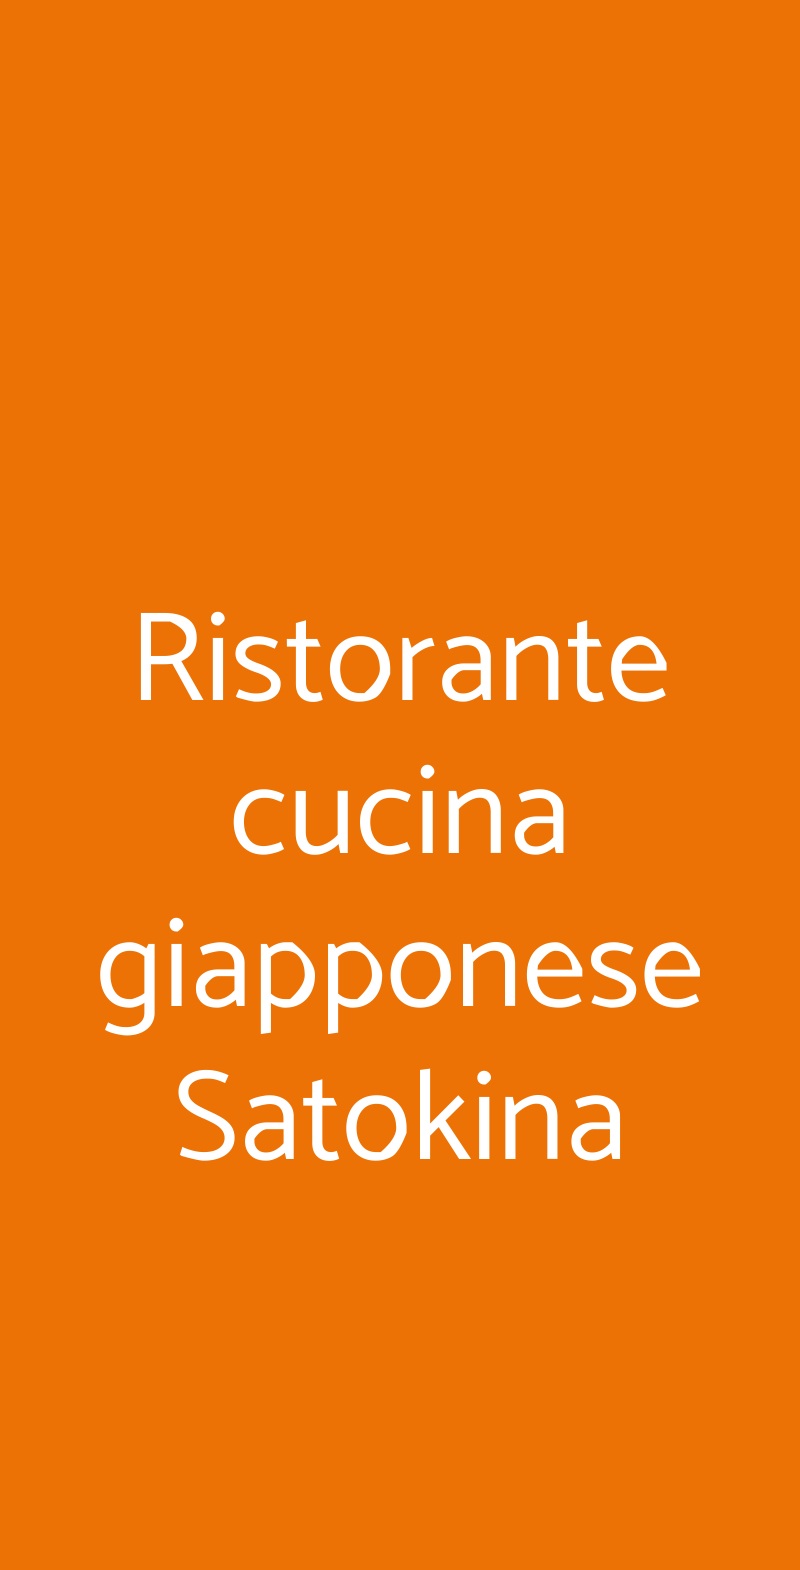 Ristorante cucina giapponese Satokina Milano menù 1 pagina